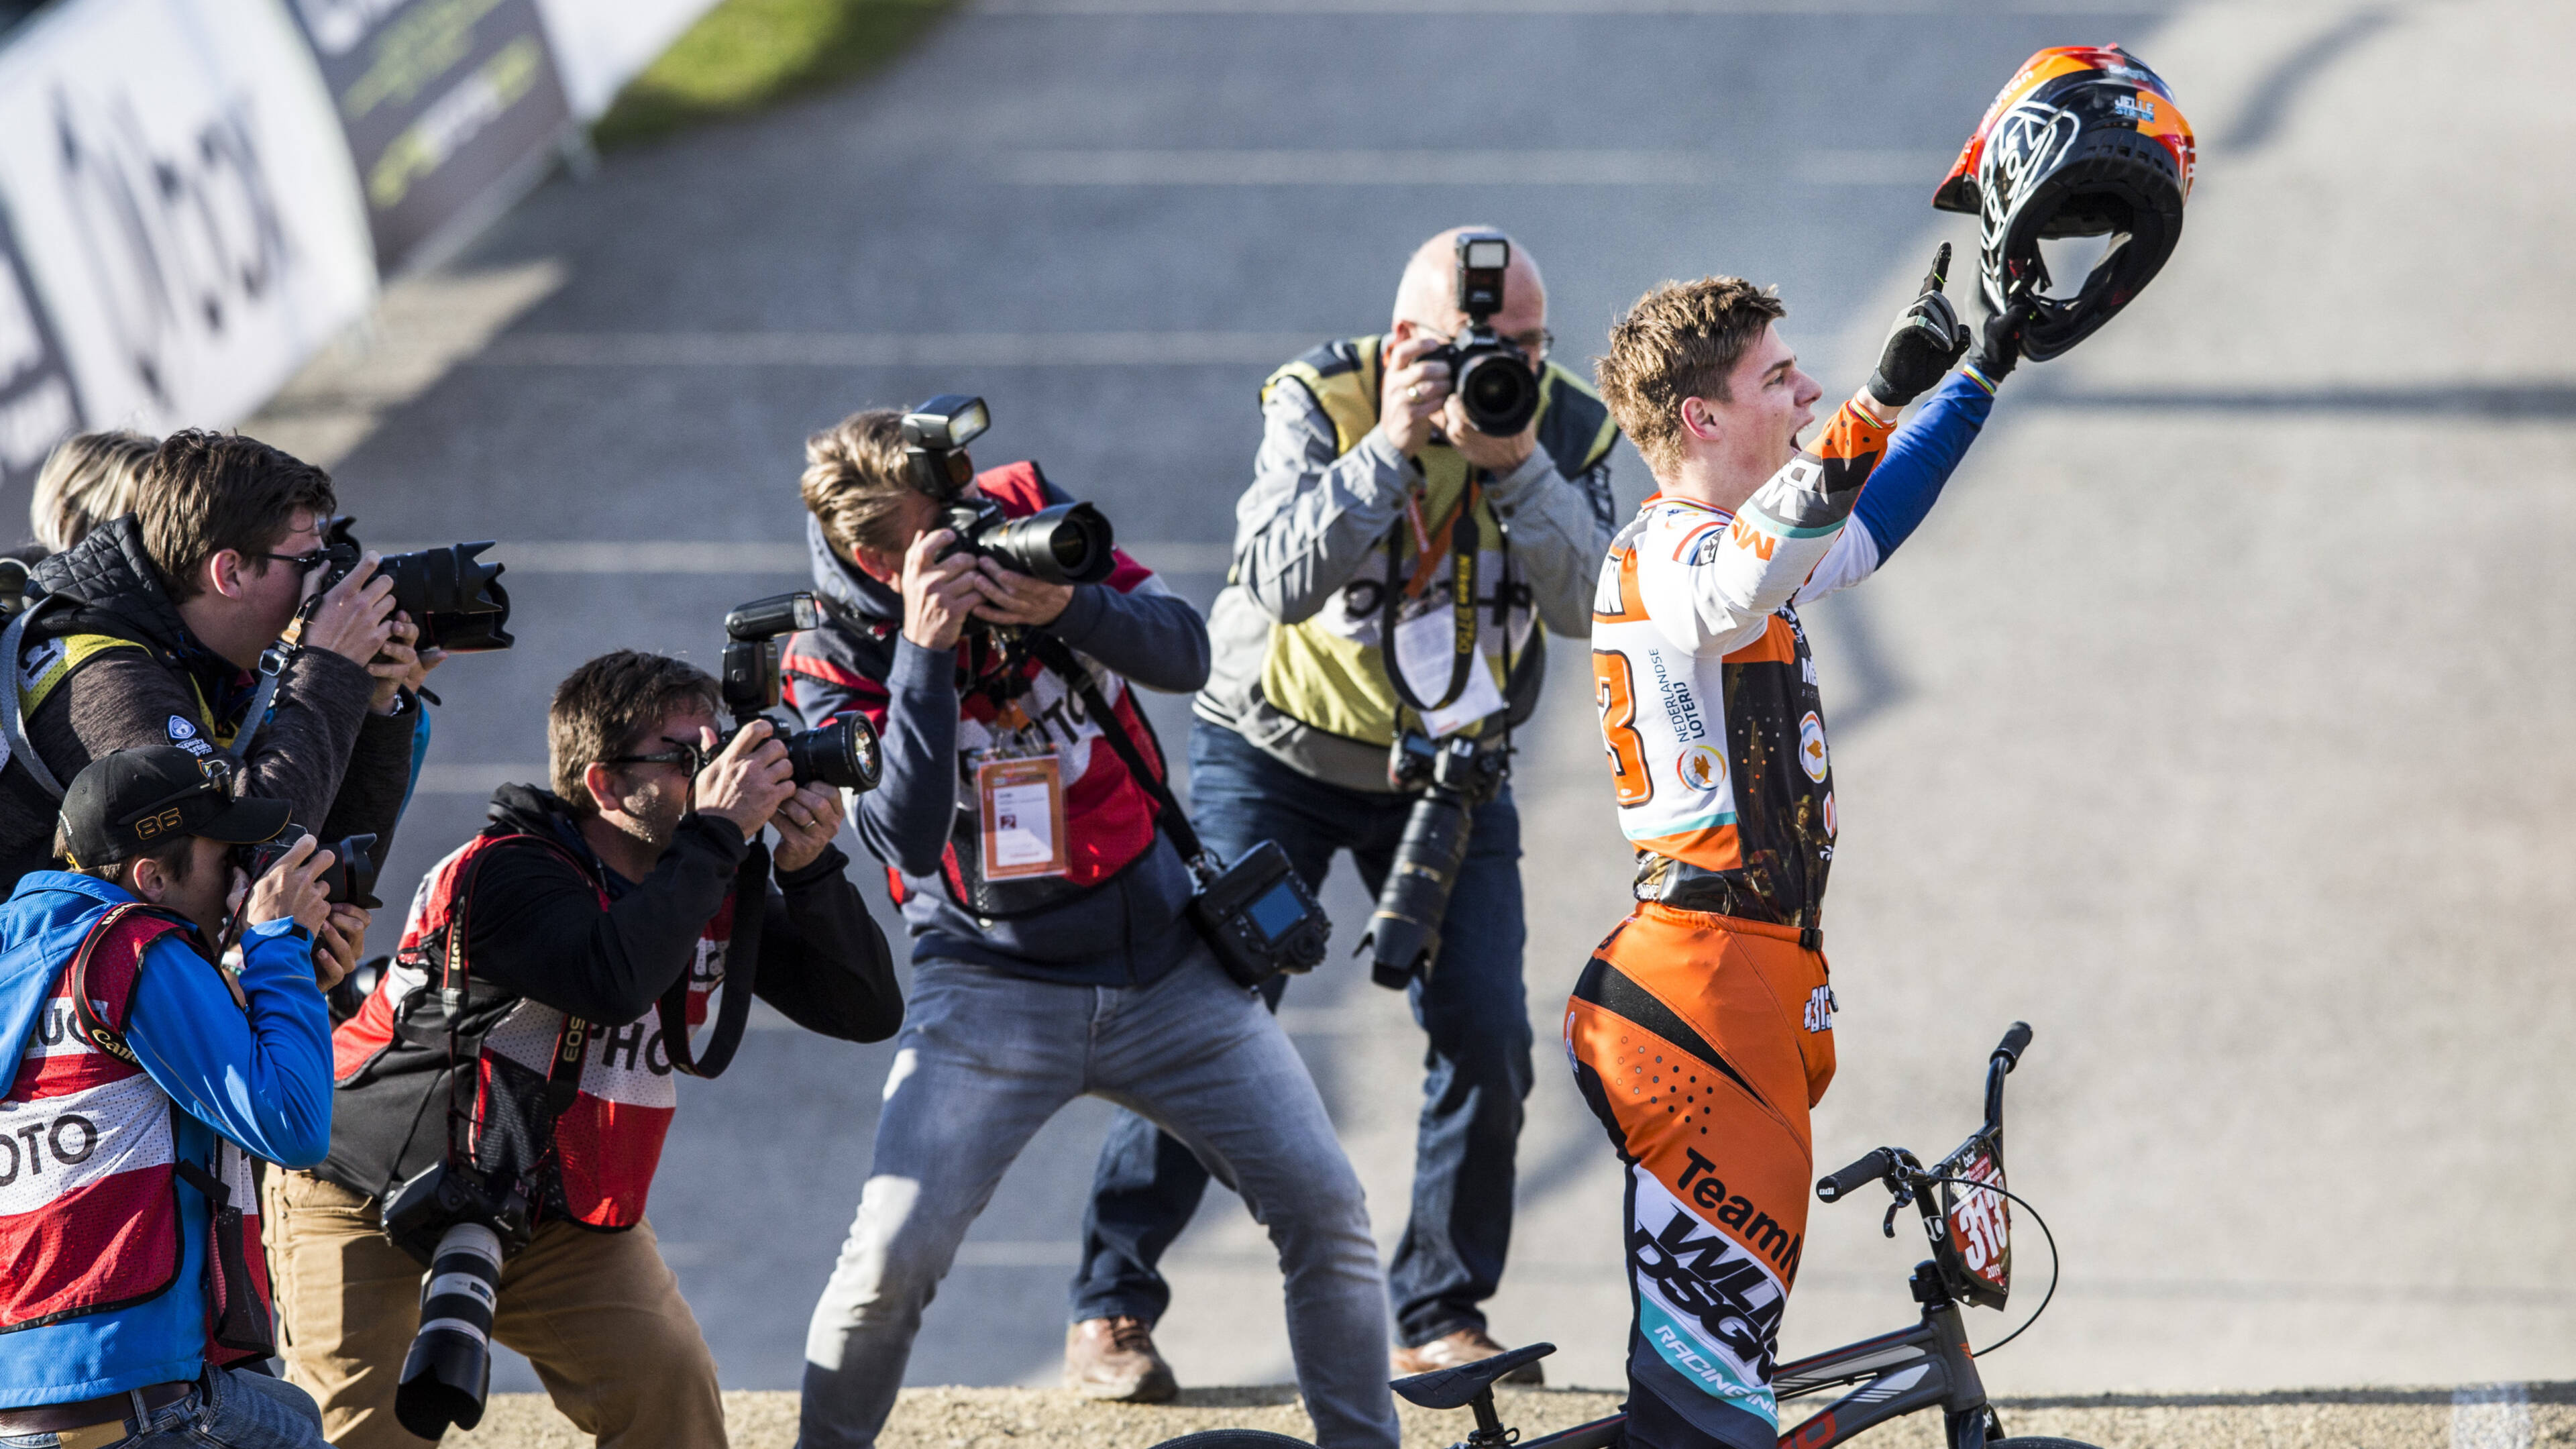 Niek Kimmann, BMXer, Papendal, World Cup victory, 3840x2160 4K Desktop